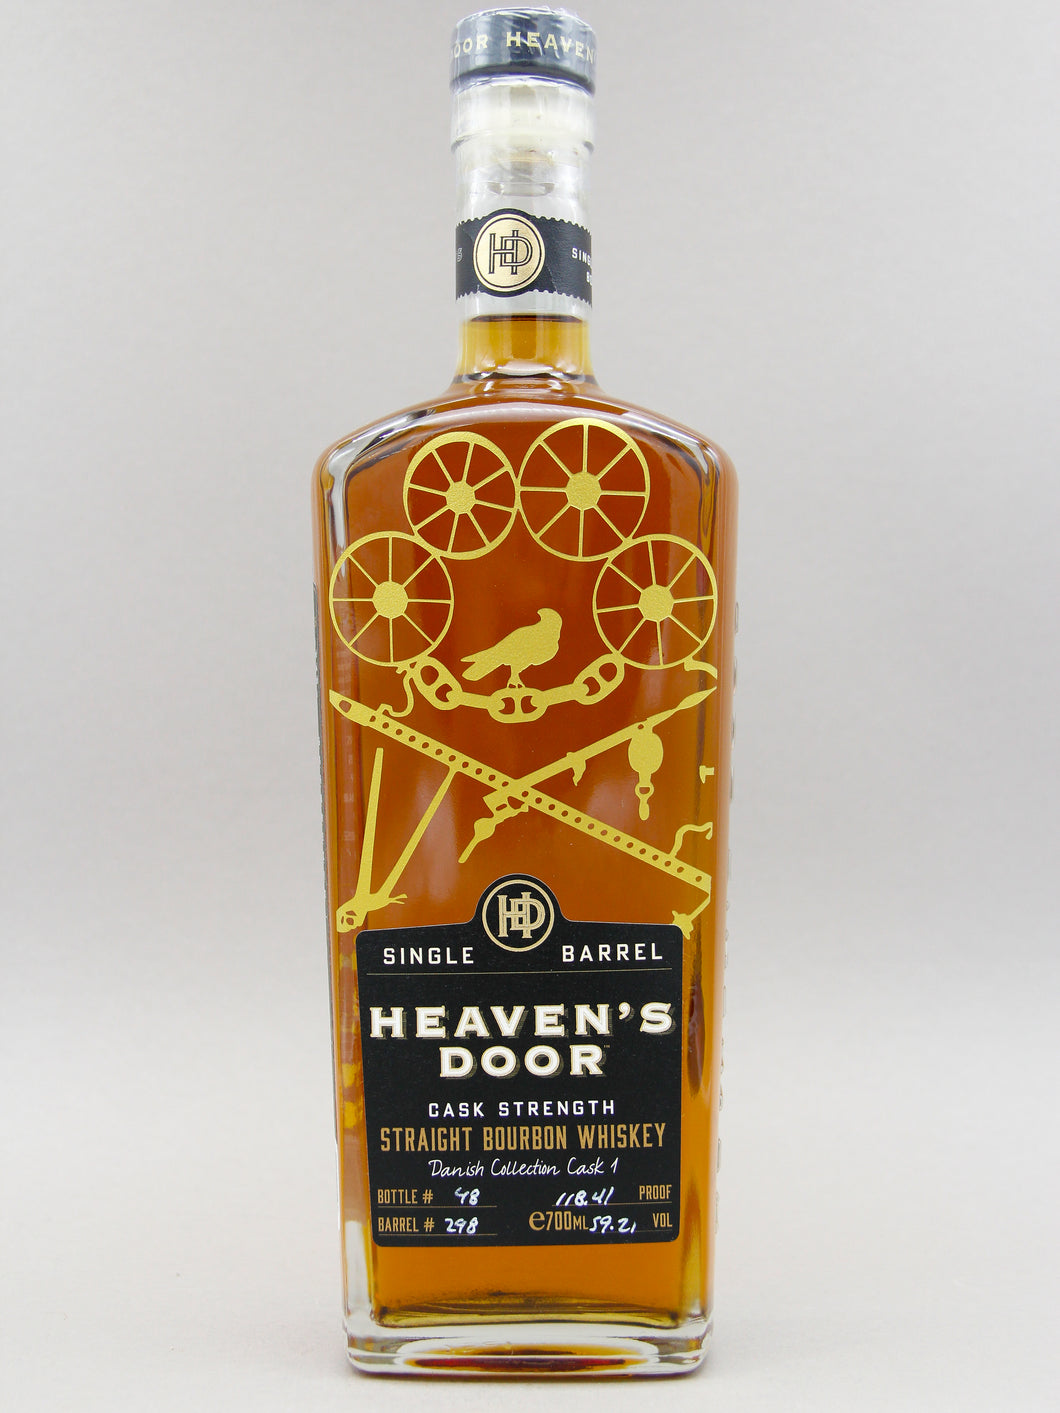 Heaven's Door, Single Barrel, Cask Strength Straight Bourbon Whiskey, Danish Collection 1 (59.21%, 70cl)